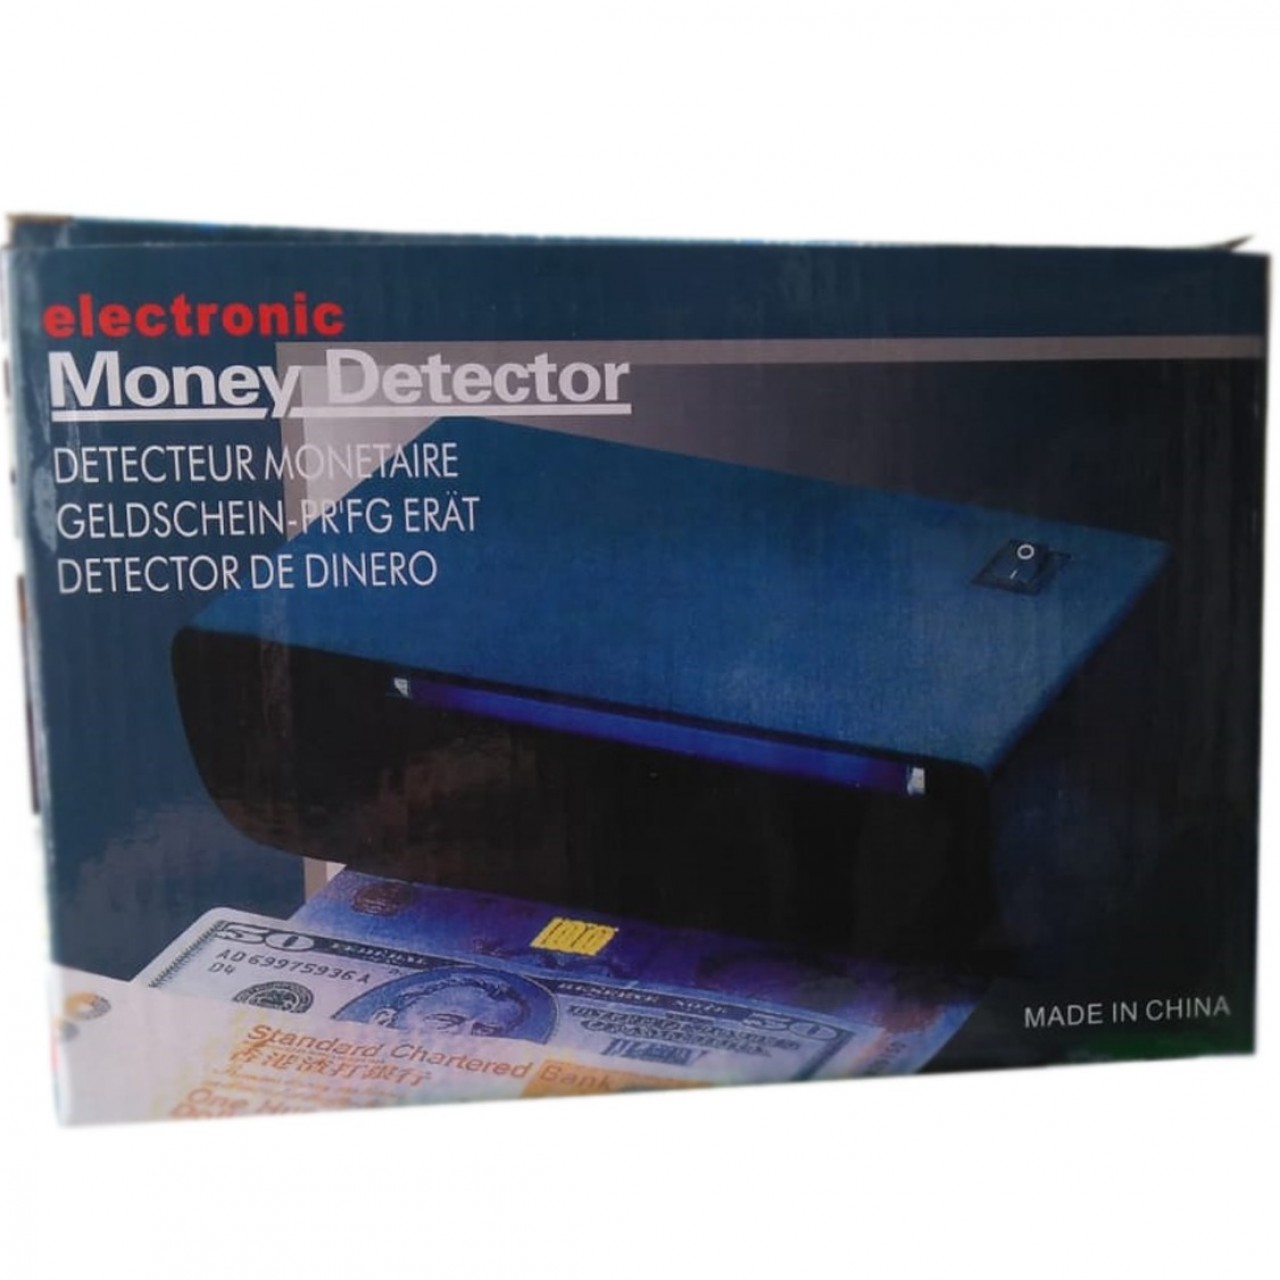 Electronic Money Detector - Fluorescent UV Lamp